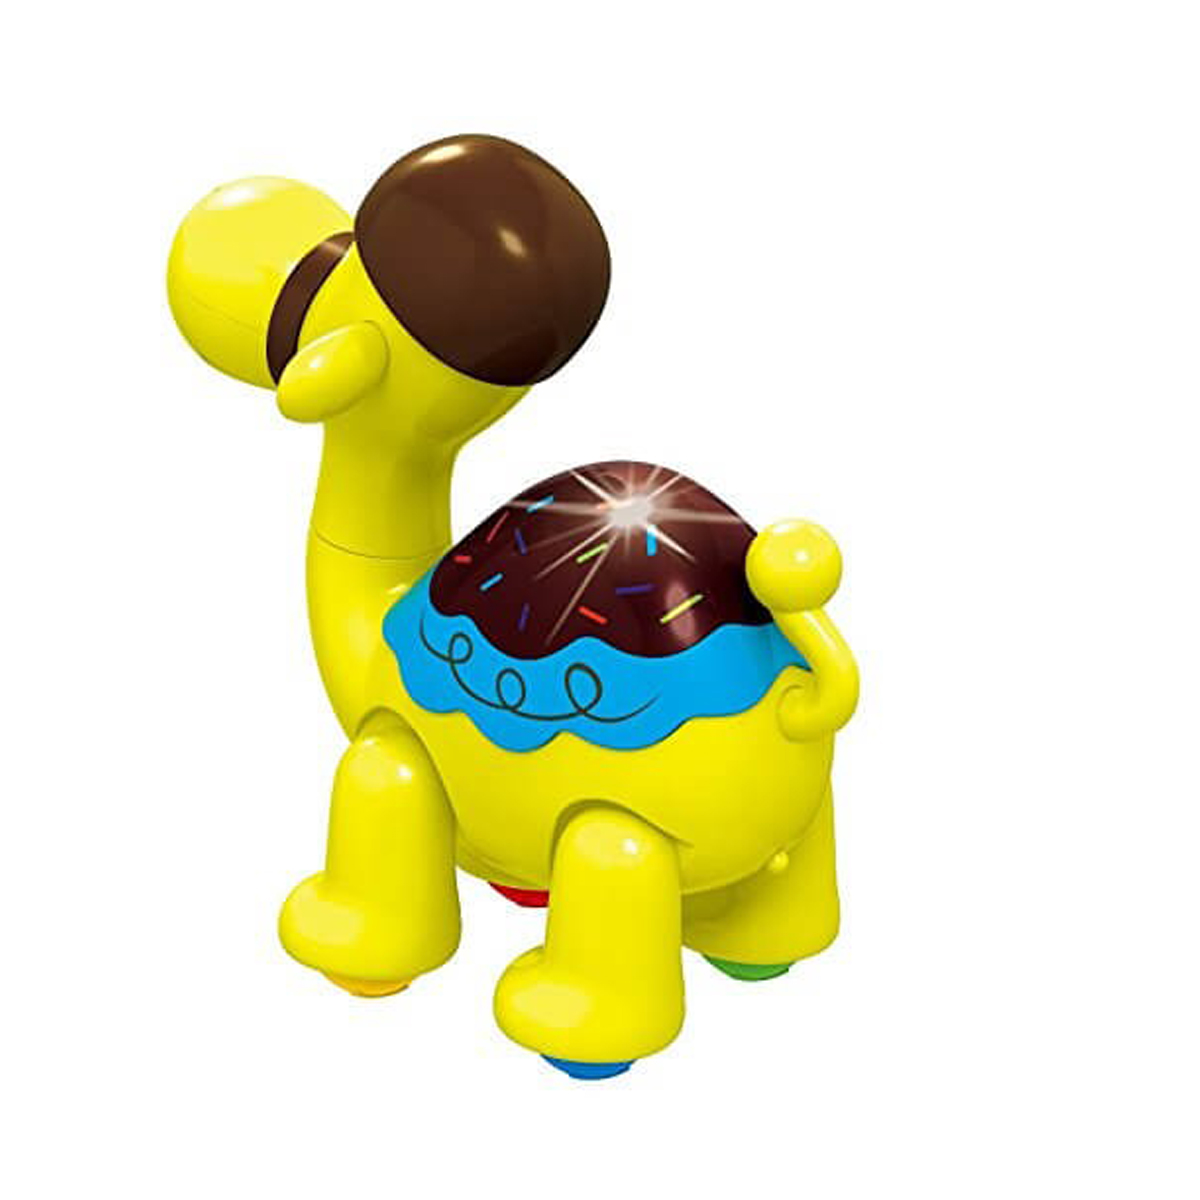 Mitashi SkyKidz Dancing Pets Musical Toy Camel - Brown